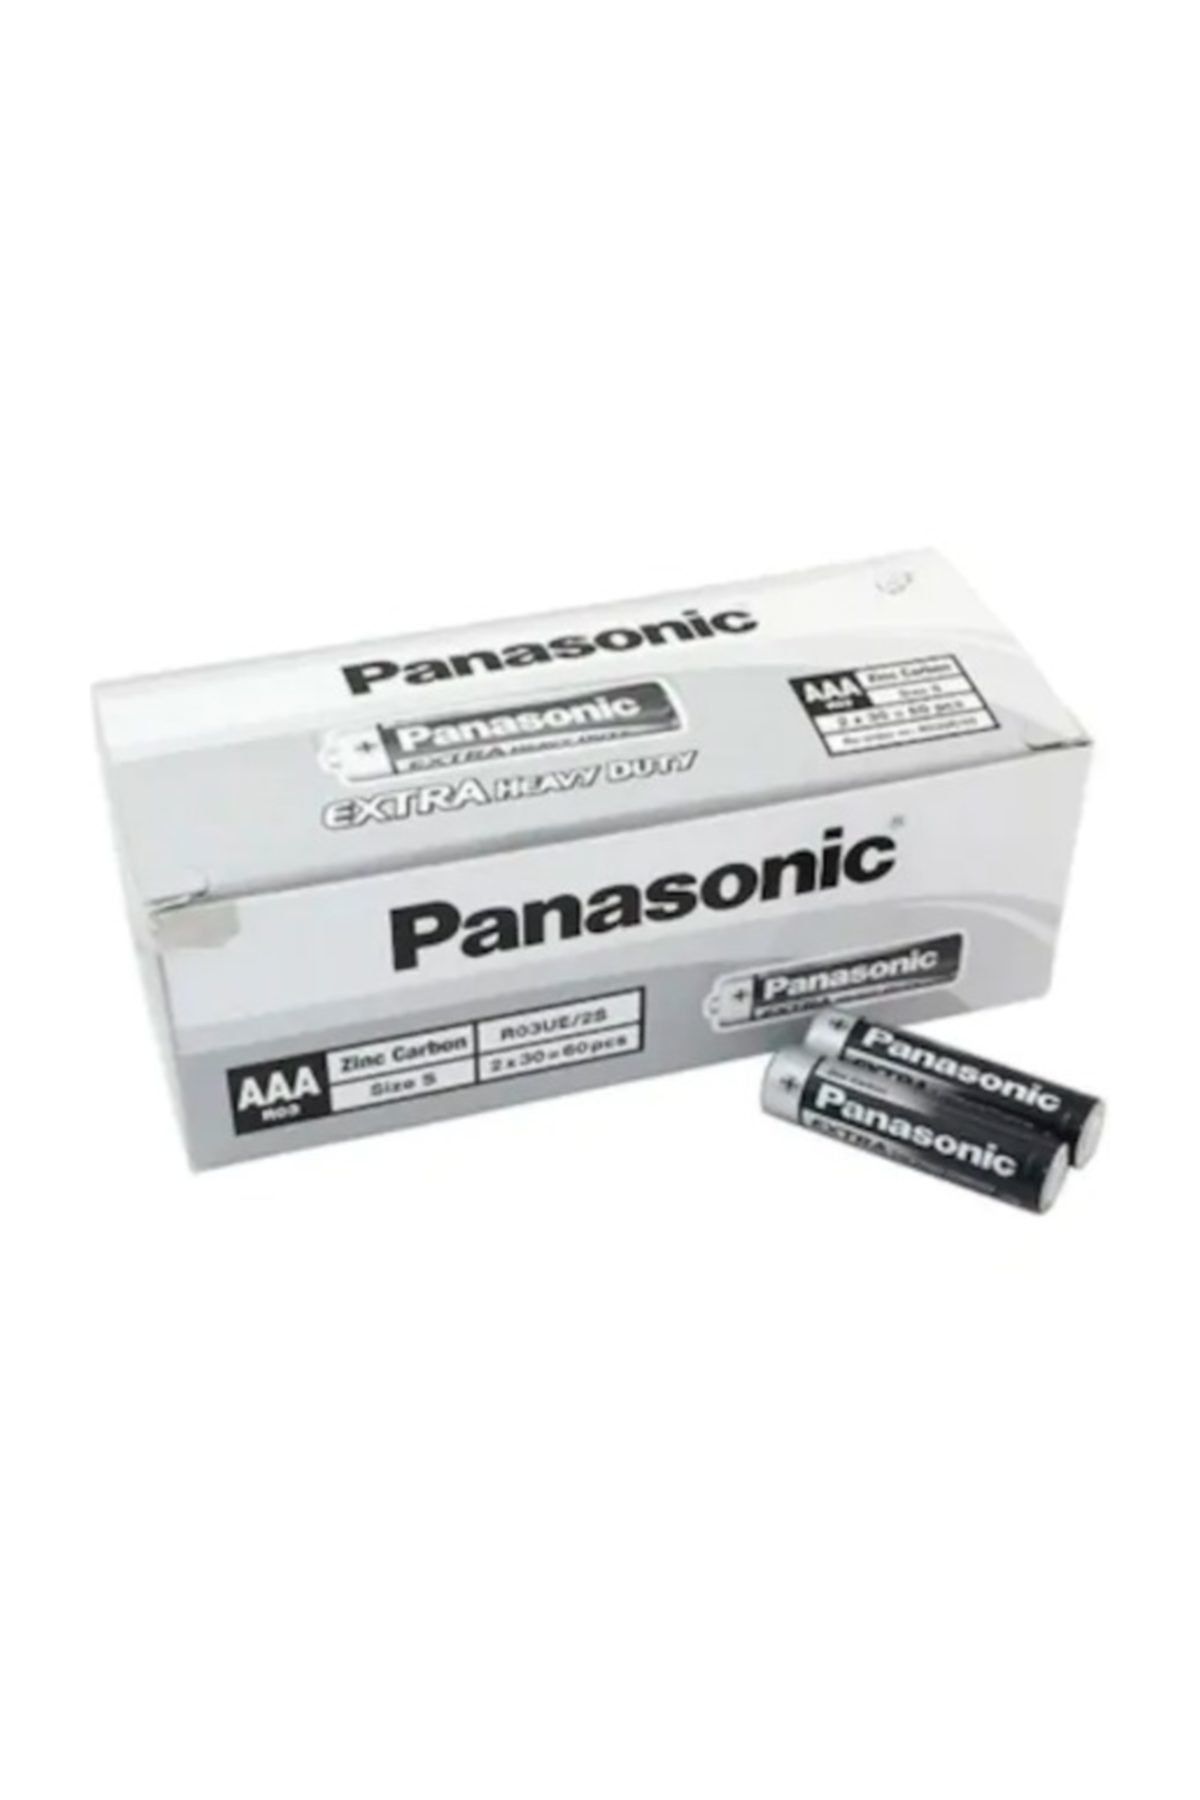 Panasonic Panasonic Kumanda Pili Aaa Pil 24 Adet(2 Li 12 Paket)